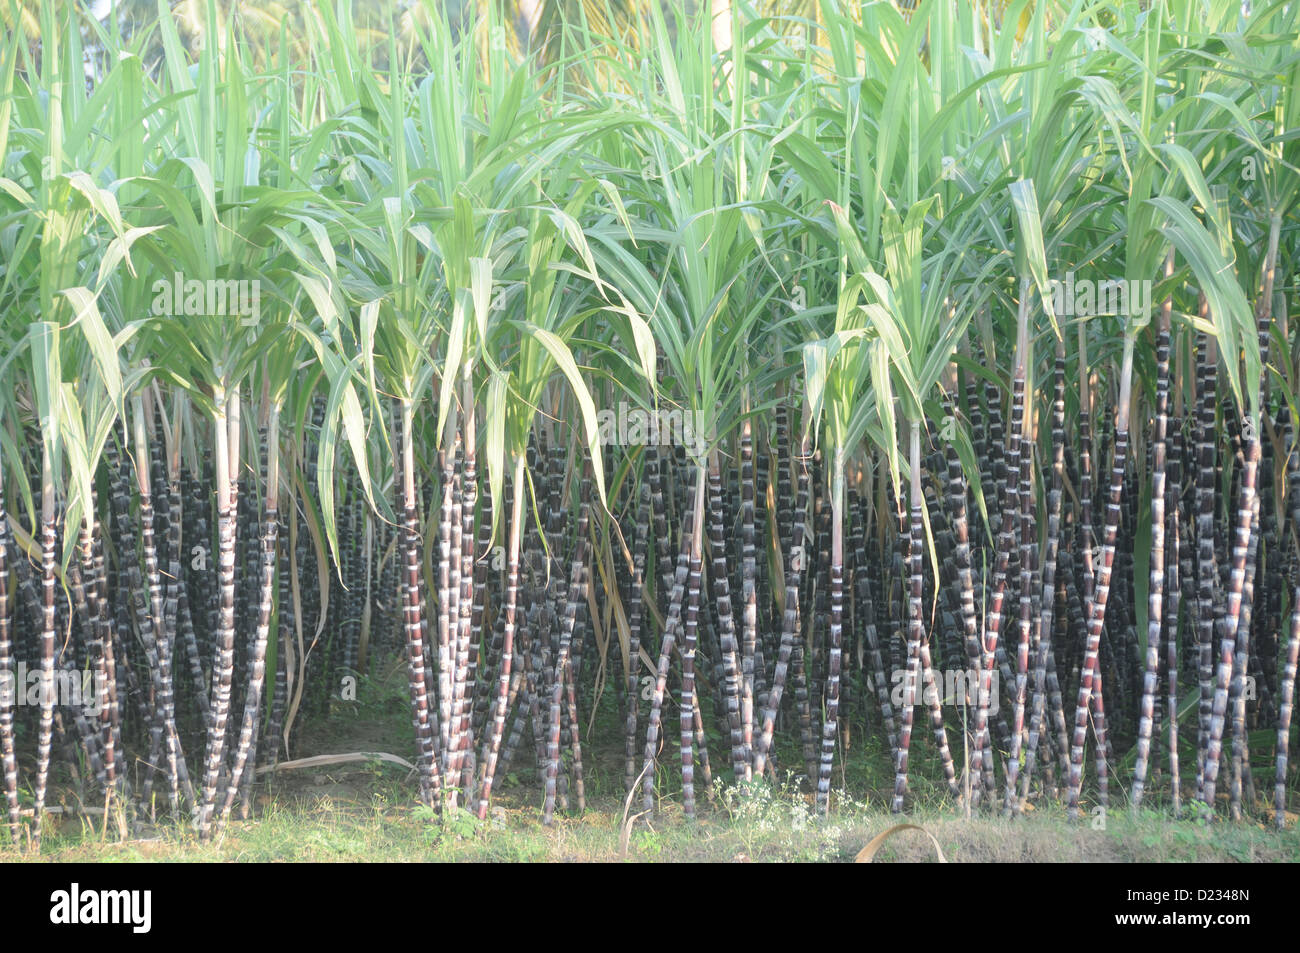 A Sugarcane Farm at Erode, Tamil Nadu, India Stock Photo